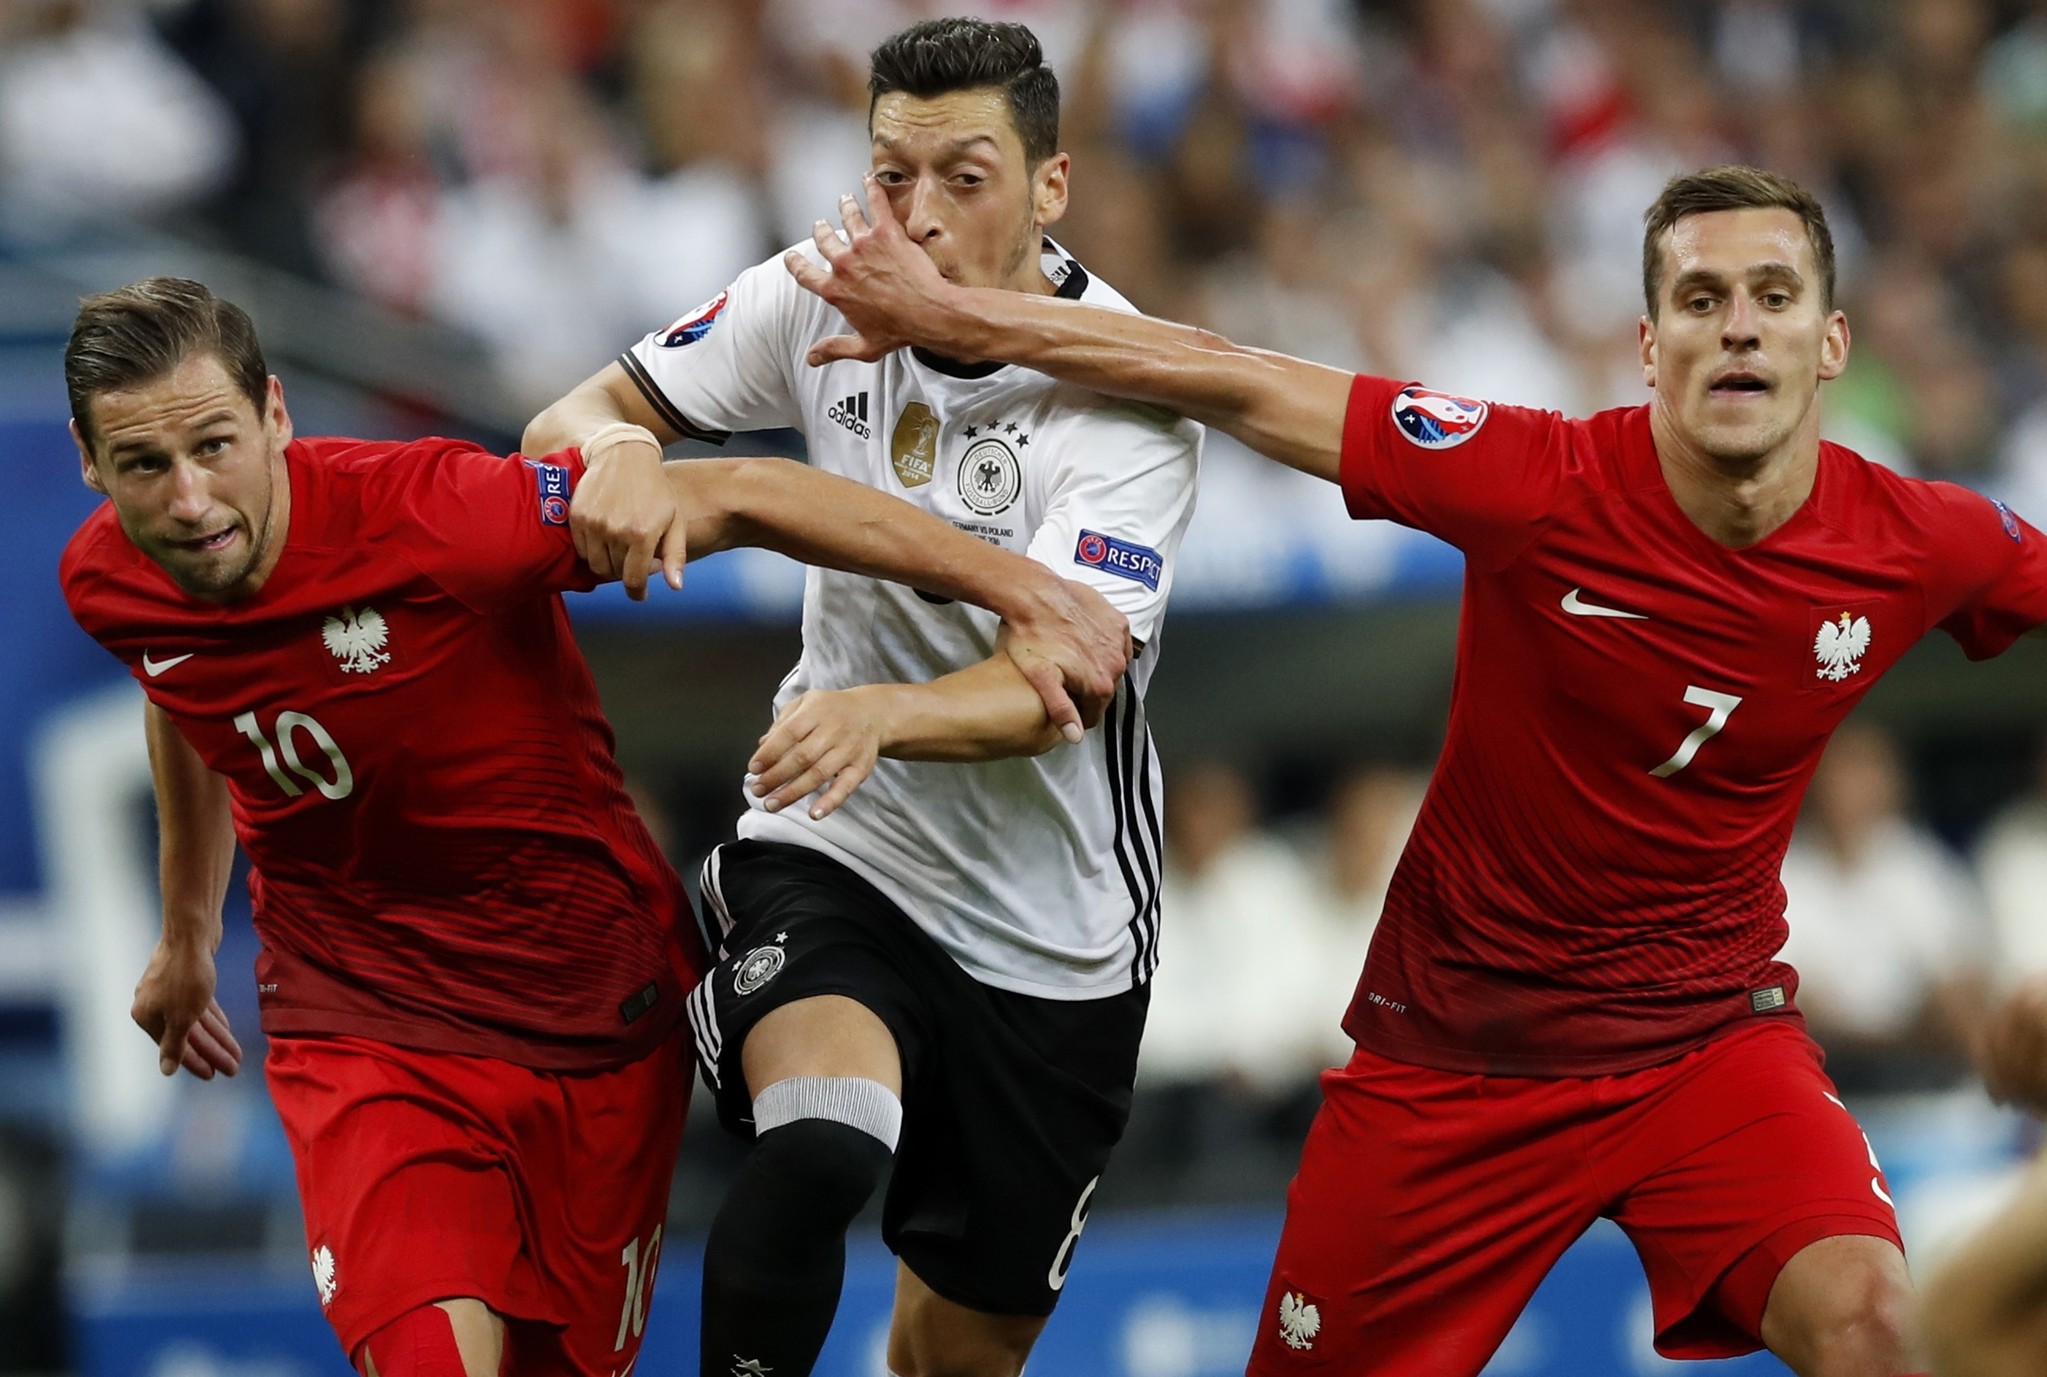 Germany's Mesut Ozil, center, is challenged by Poland's Grzegorz Krychowiak, left, and Poland's Arkadiusz Milik during the Euro 2016 Group C soccer match. (AP Photo)